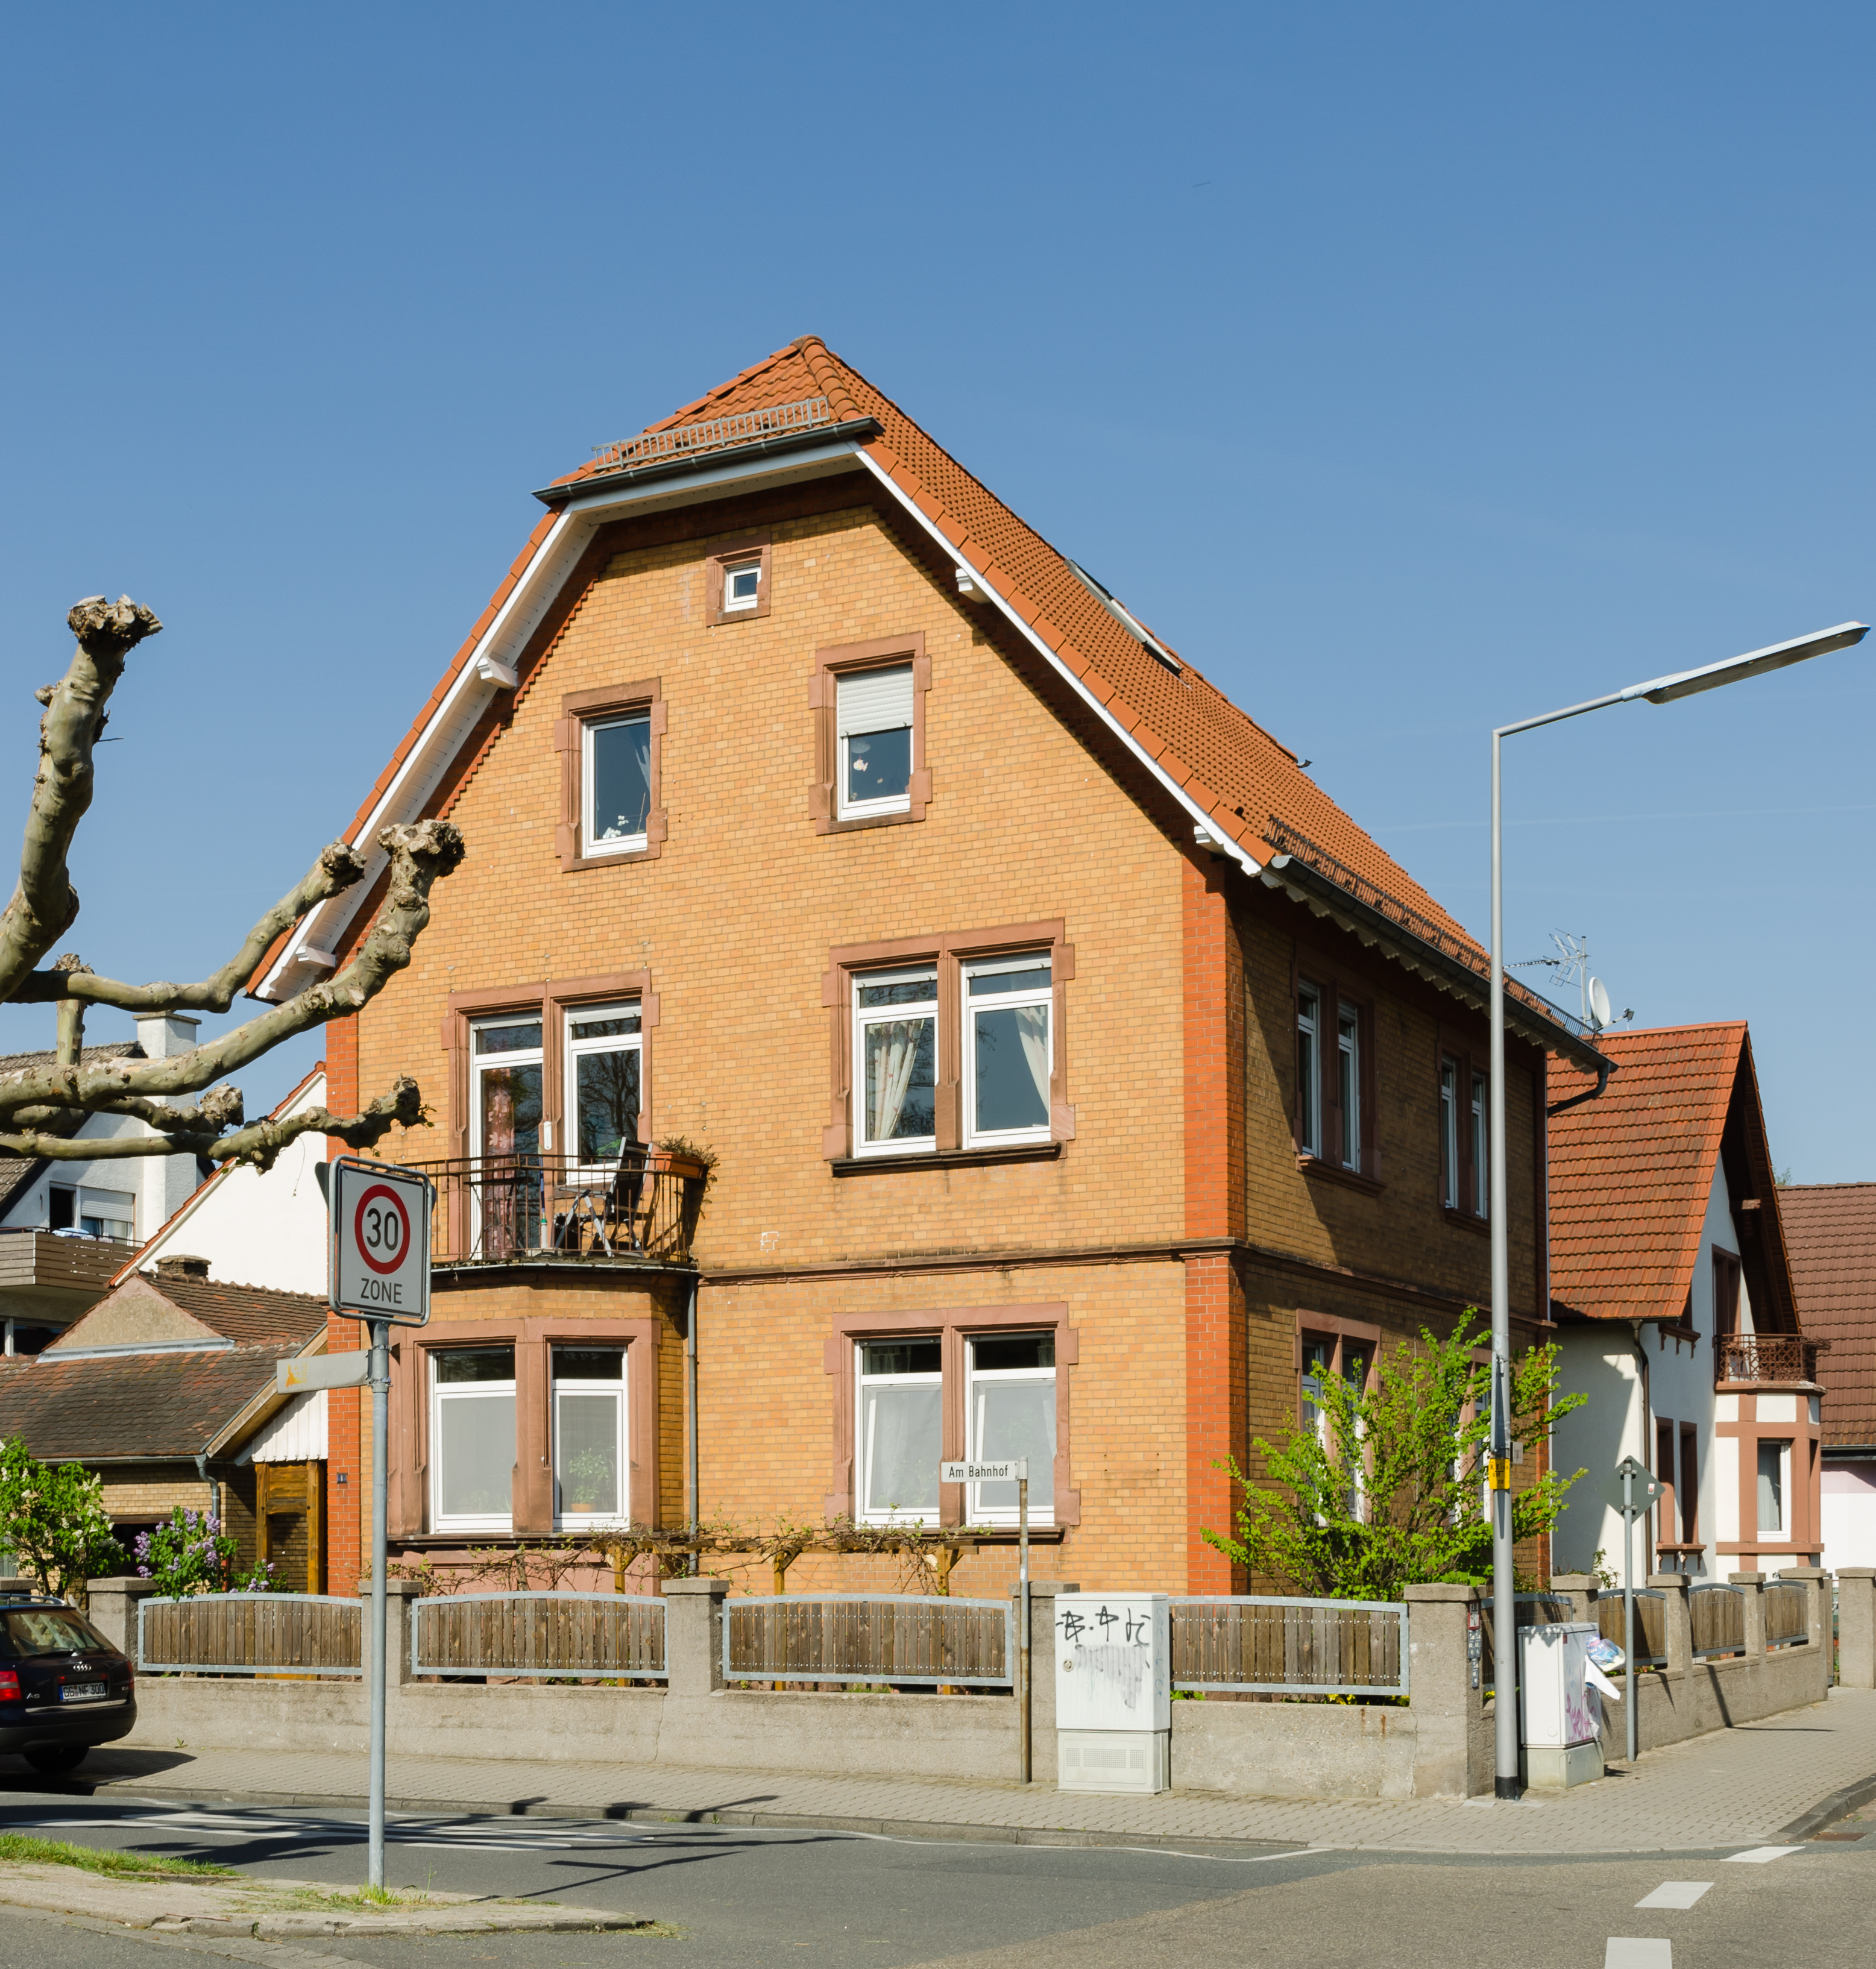 Residential building in Mörfelden-Walldorf - Germany -07